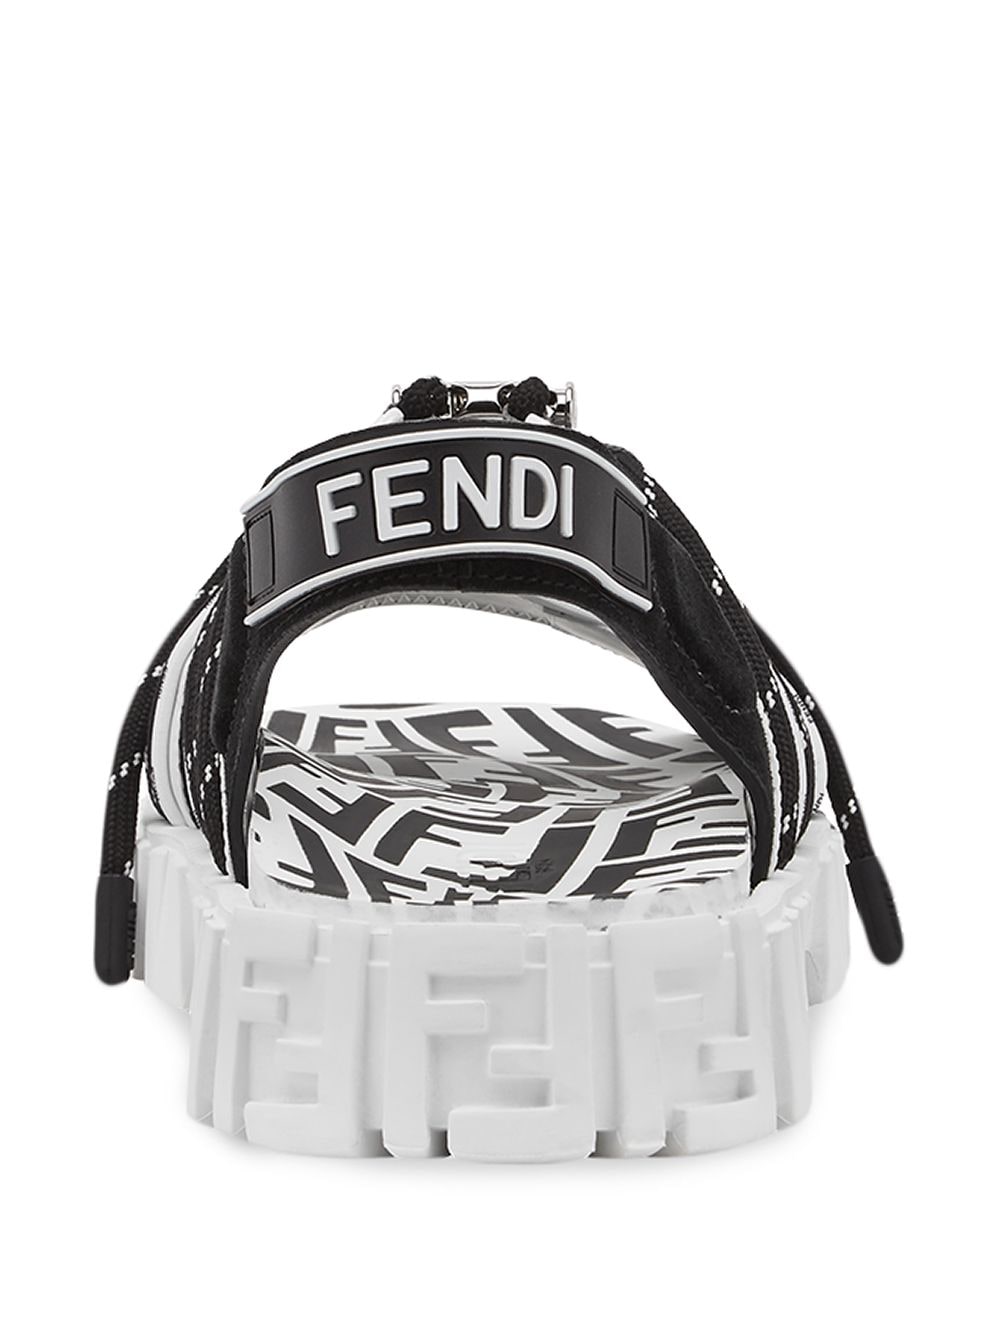 фото Fendi сандалии на массивной подошве с логотипом